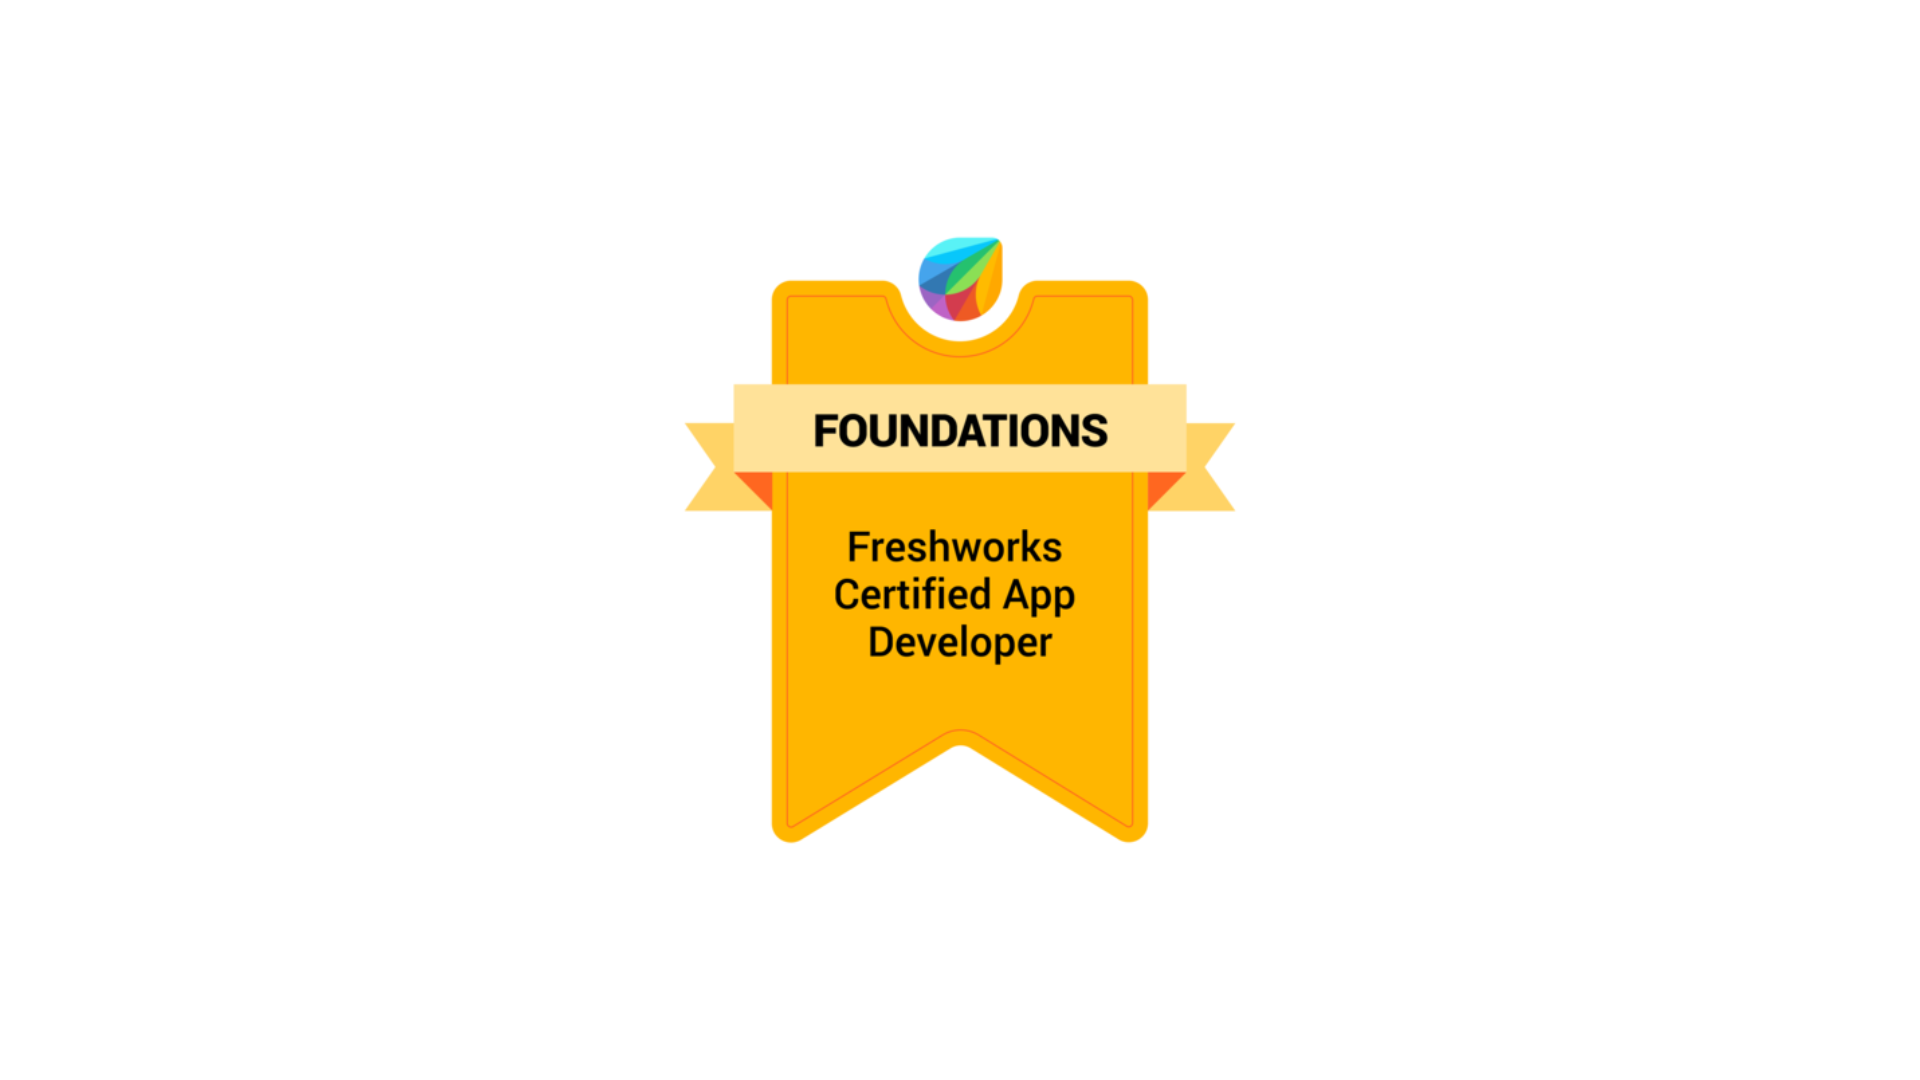 Synerity developers obtain Freshworks Certified App Developer - certification